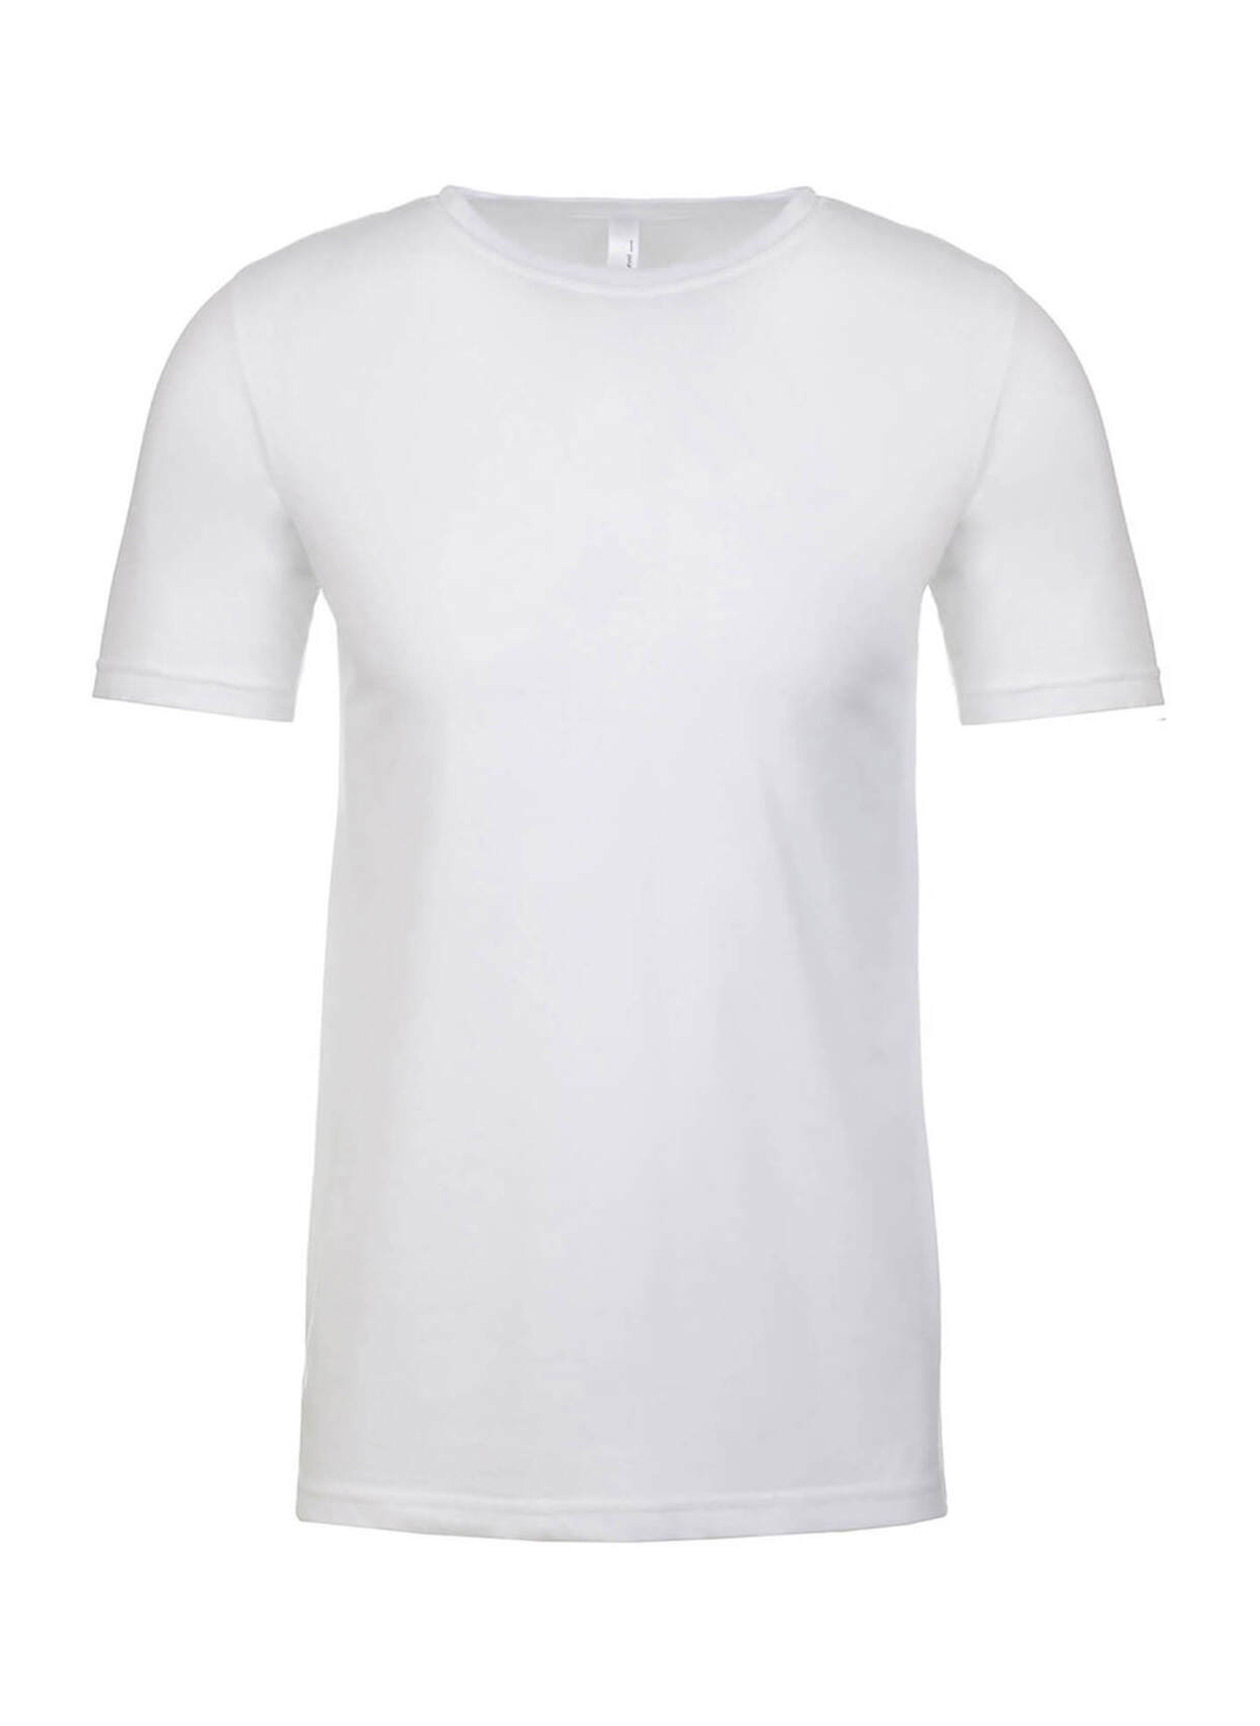 Next Level 6200 Shirt (65 Polyester & 35 Cotton)